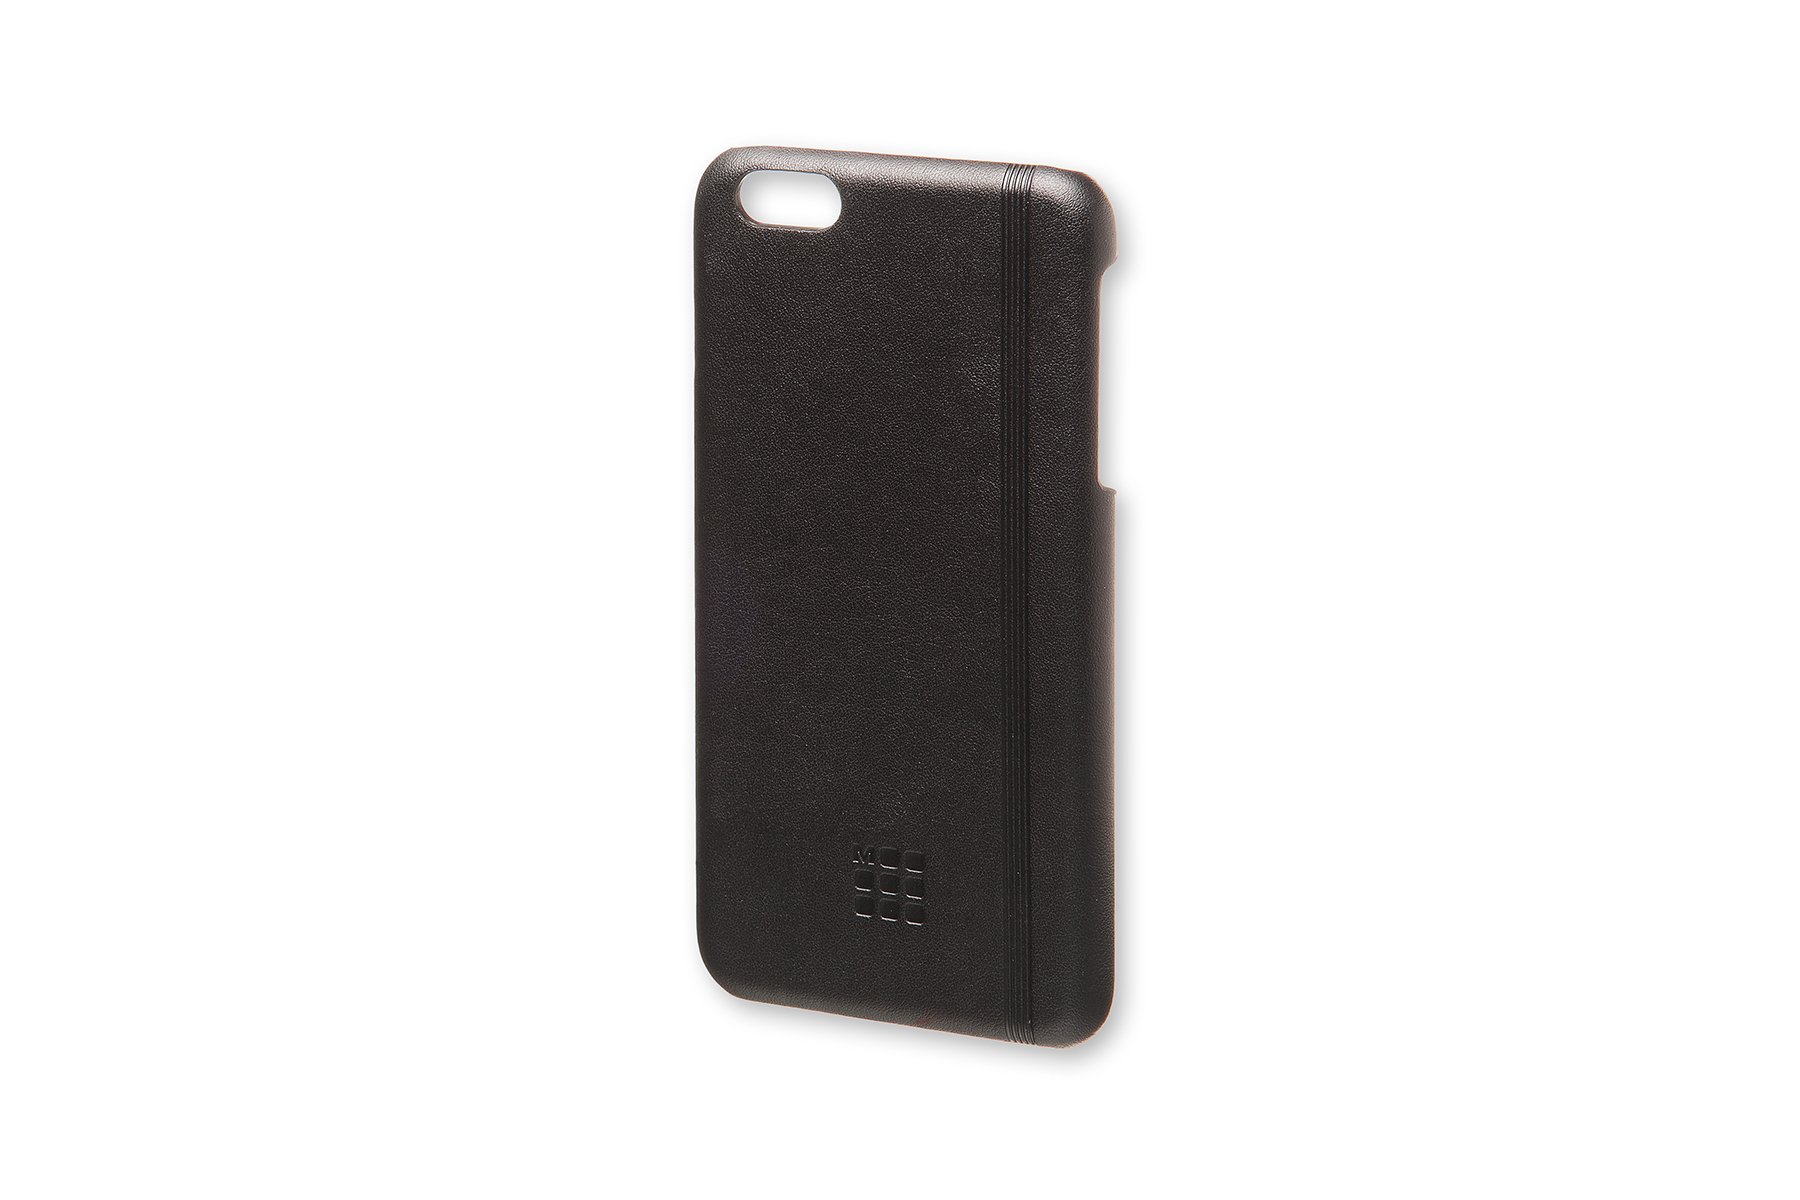  Carcasa Hard Case Iphone 6 Plus / 6s Plus neagra | Moleskine 